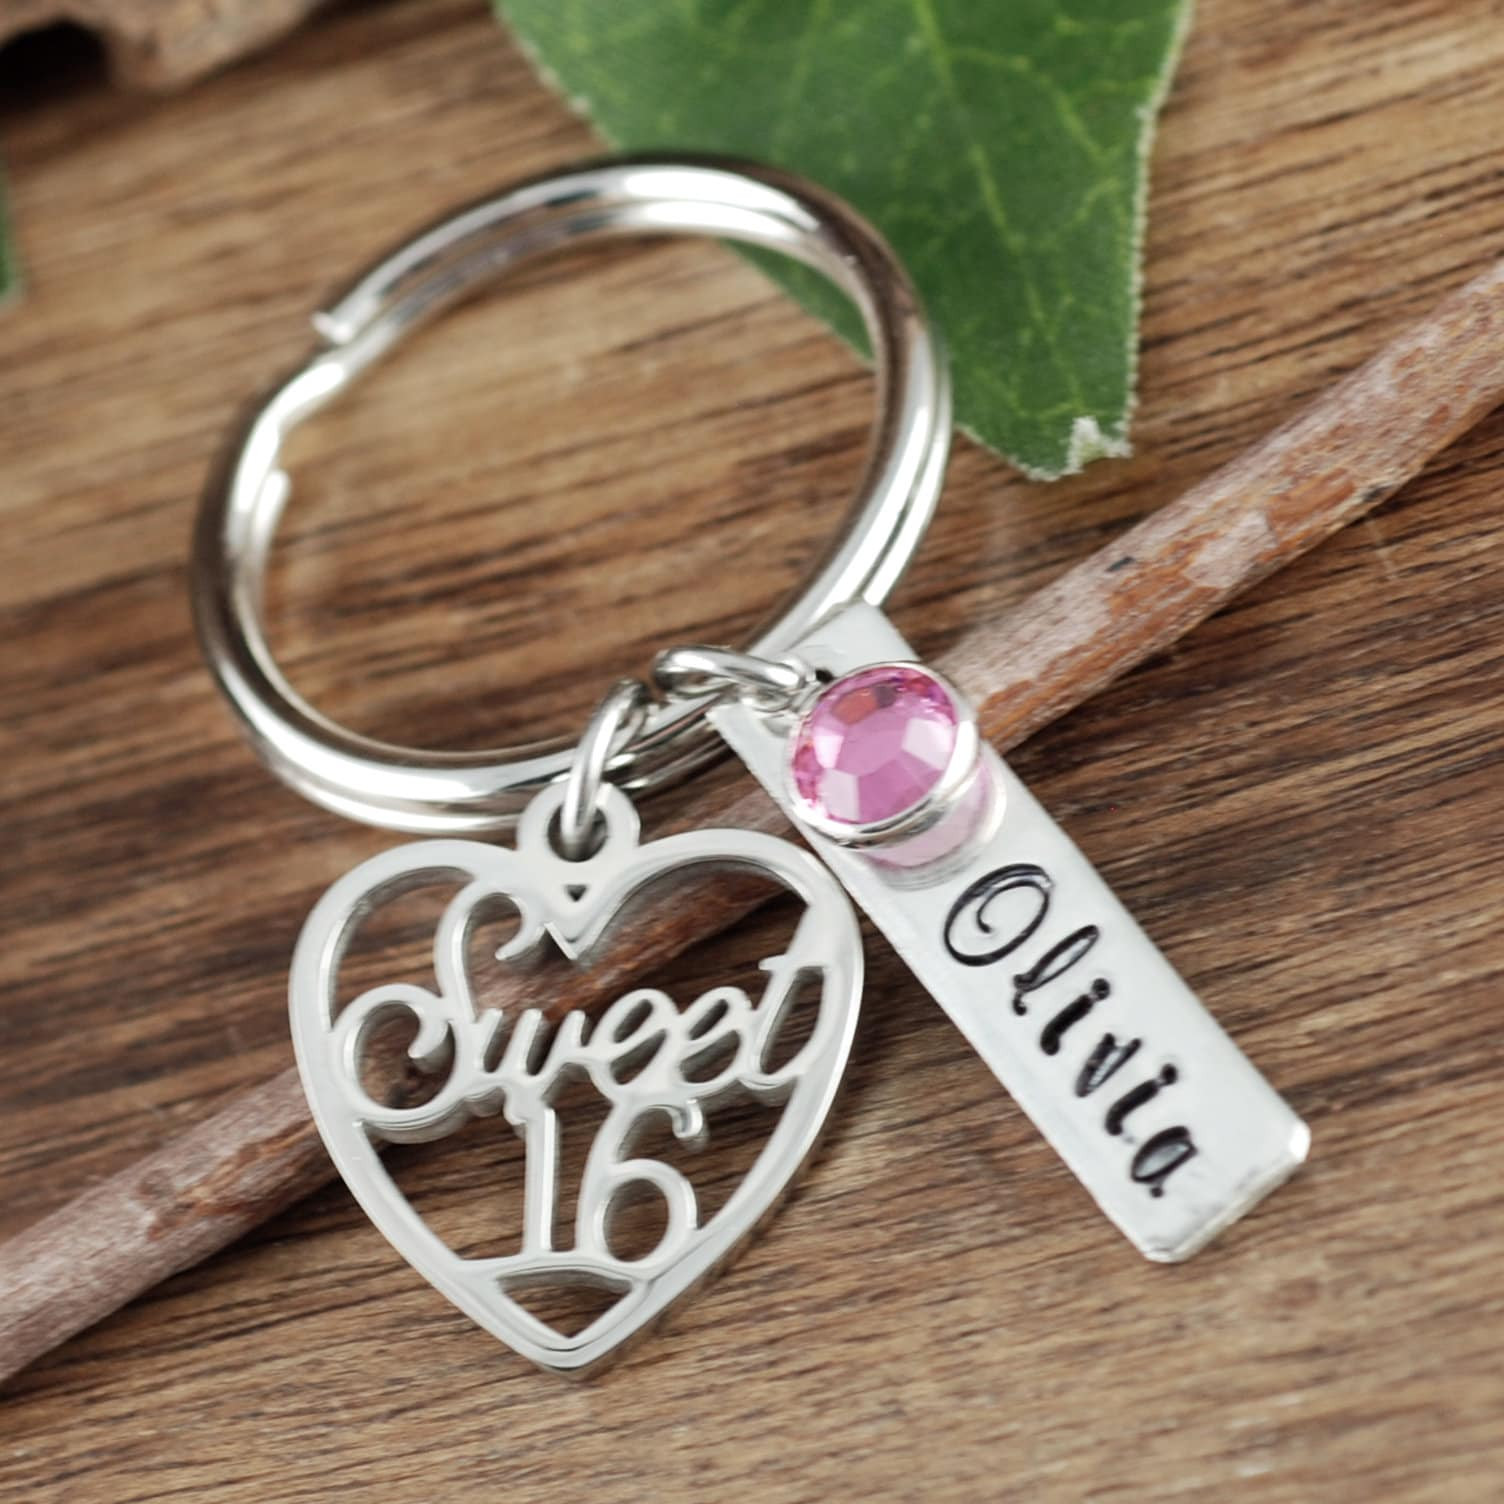 Sweet 16 Gift Ideas For Girls
 Personalized Sweet 16 Keychain Sweet Sixteen Jewelry